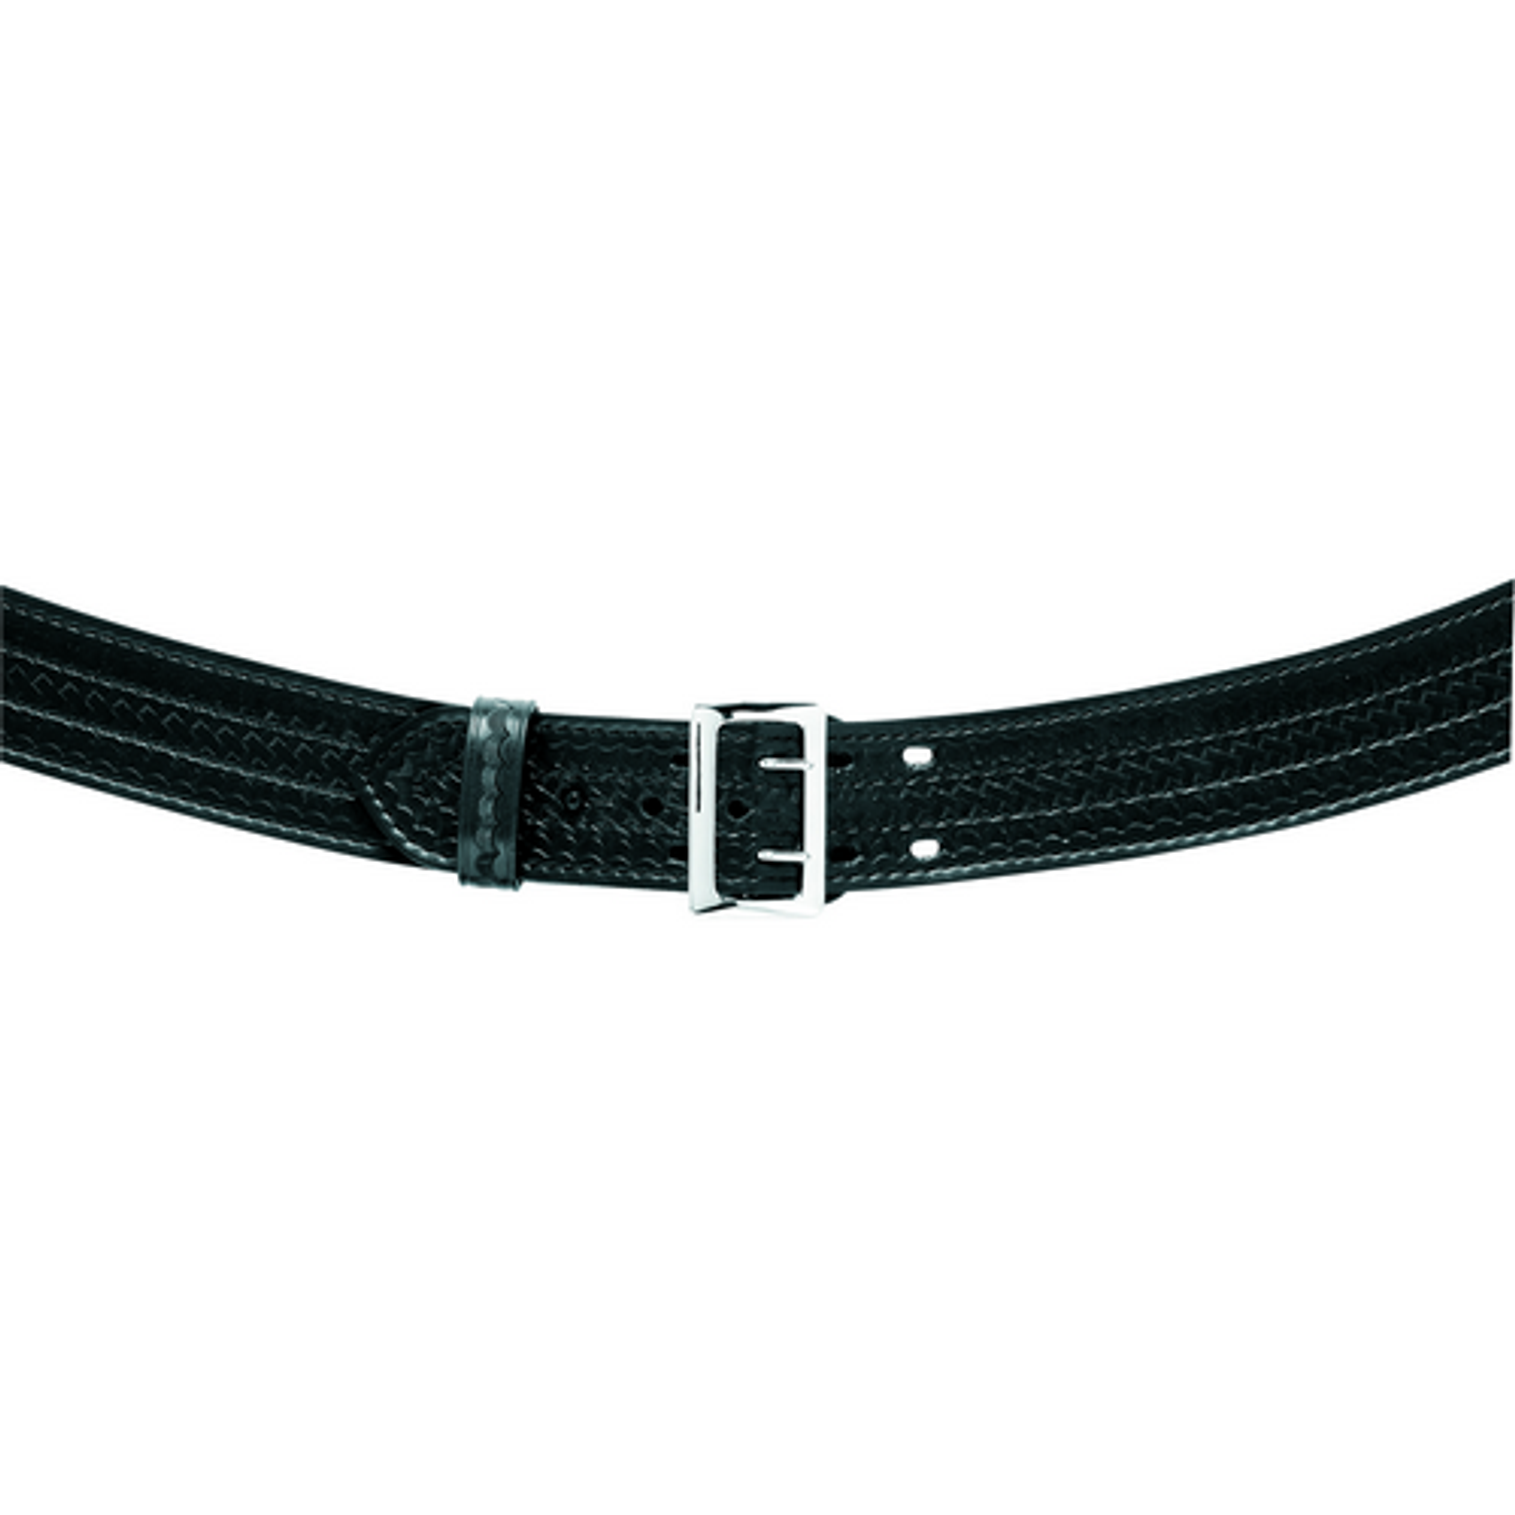 872 - Contoured Duty Belt, Suede Lined, 2.25 (58mm) - KR872-36-9B